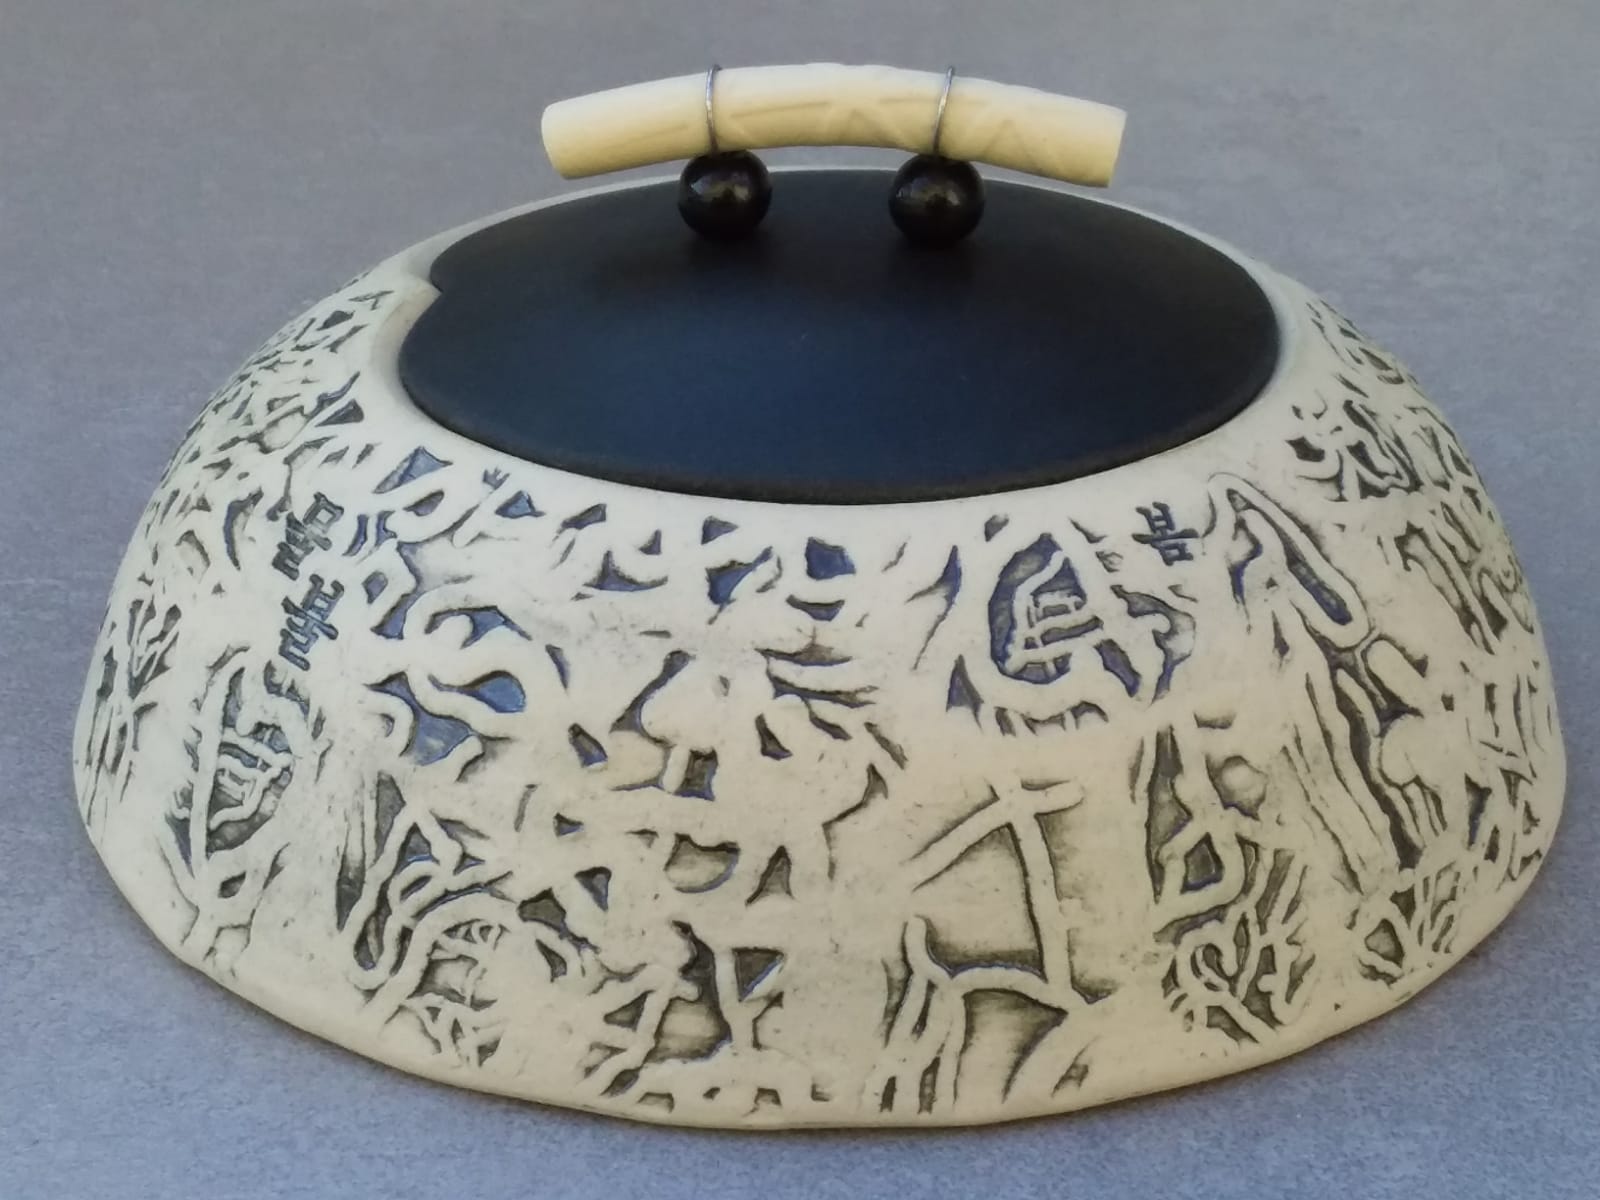 Zen Pottery with Flower Holder - Medium